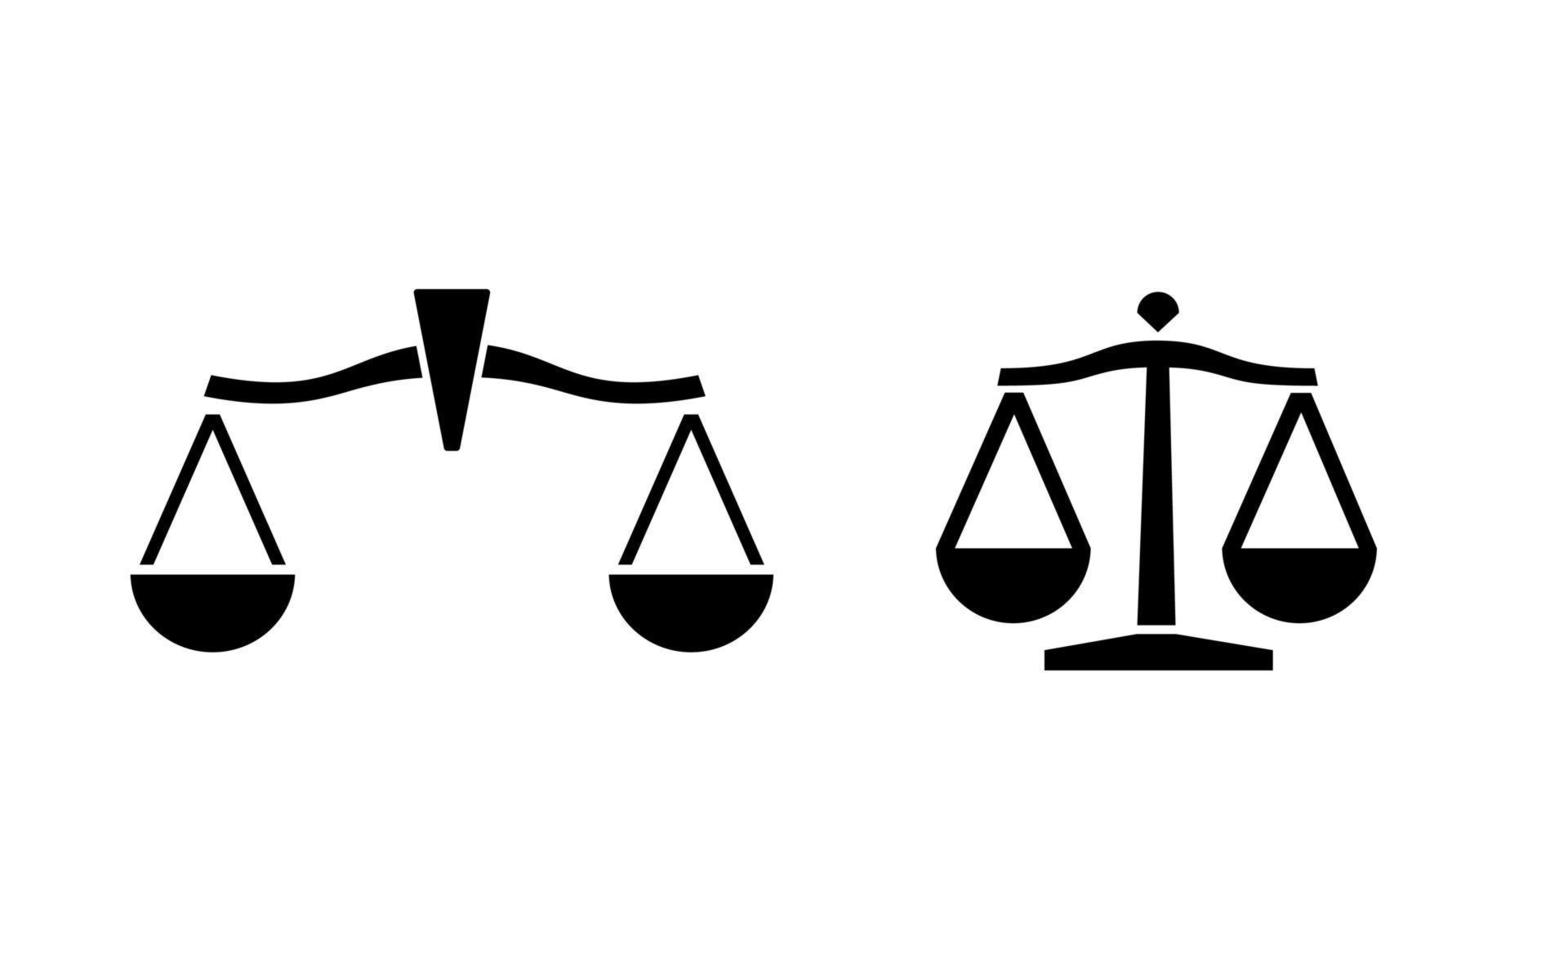 Law judgement legal scales logo vector